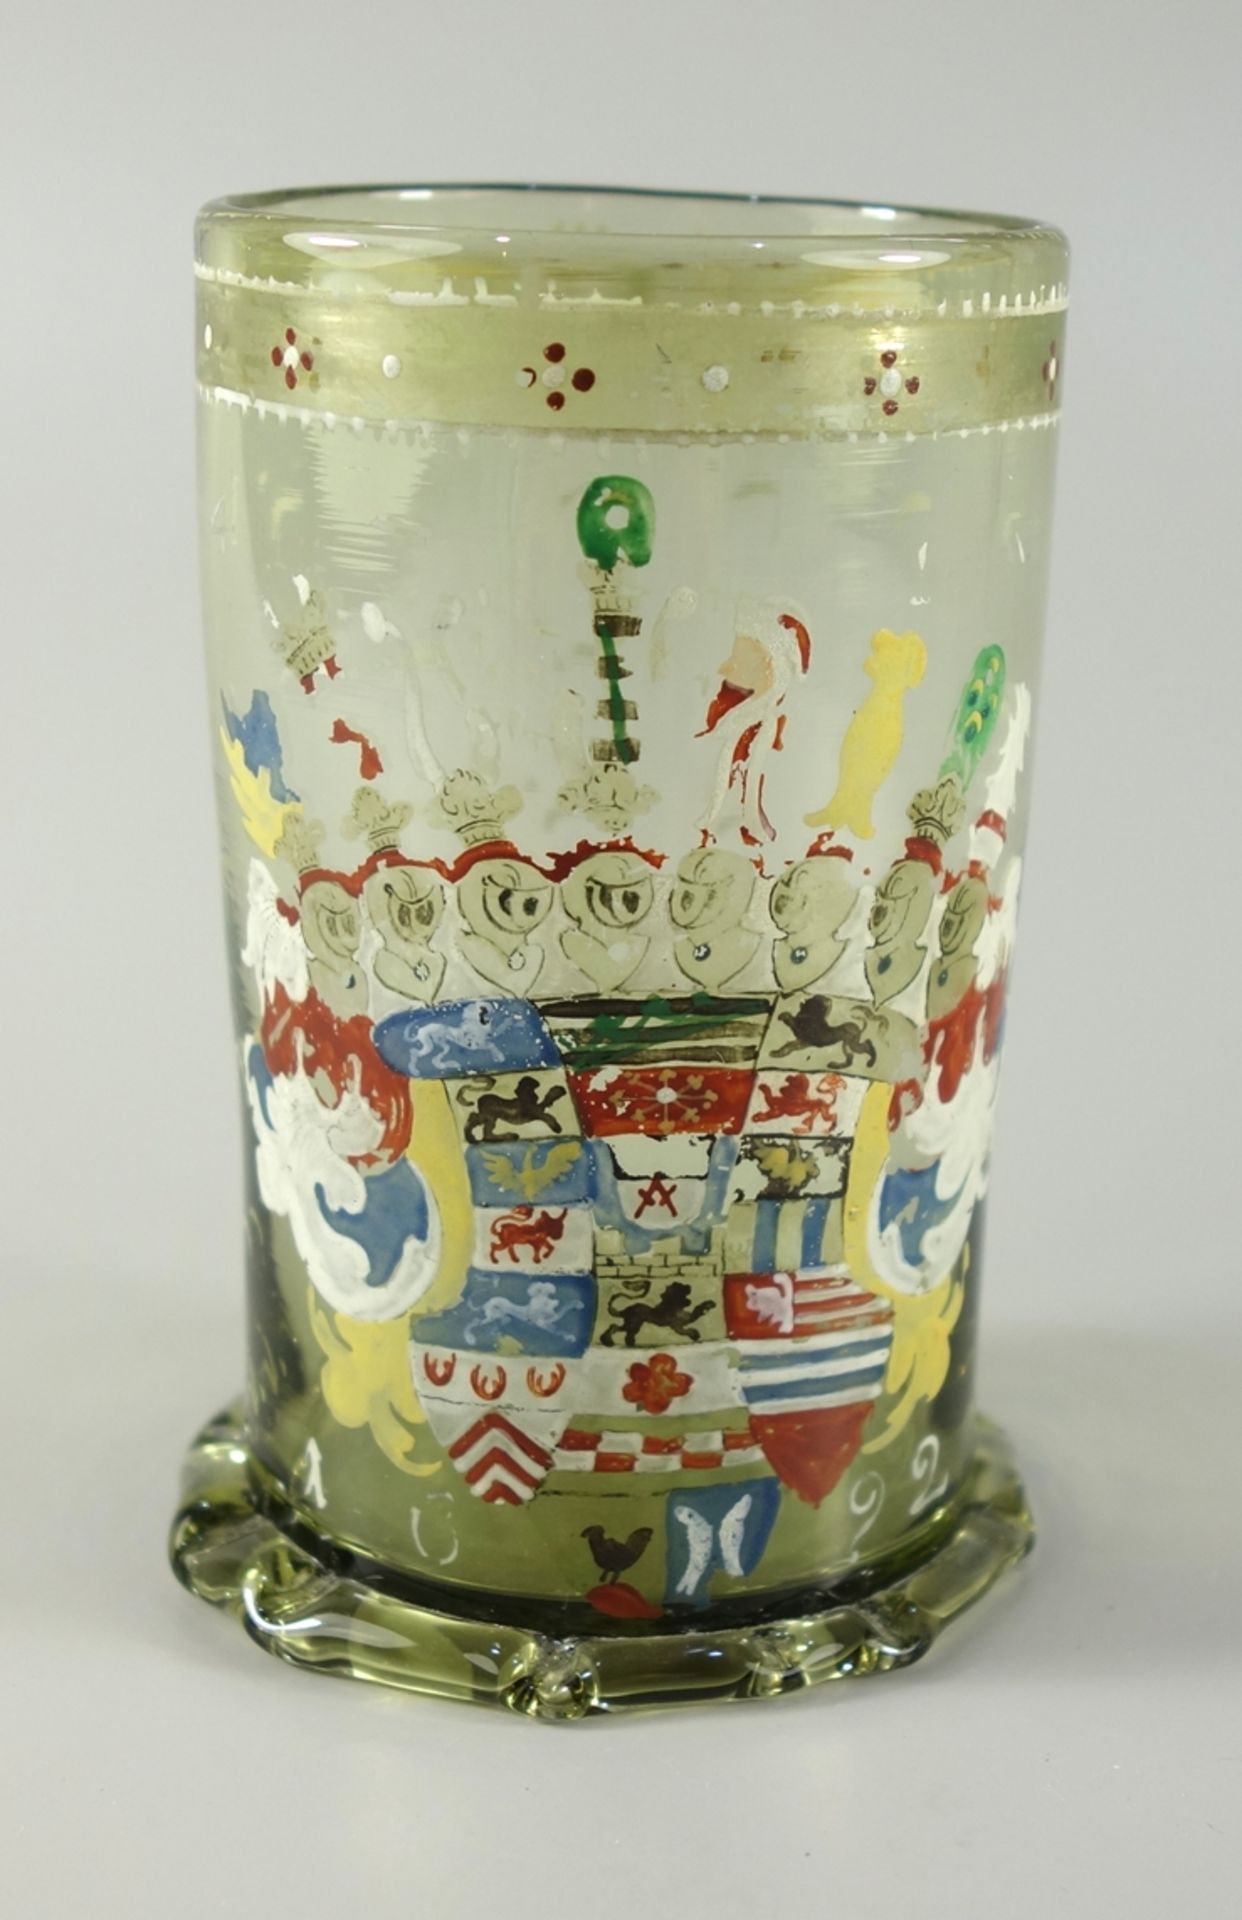 Becherglas mit Wappen, Historismus, um 1870, grünes Glas, zylindrische Wandung, am Stand